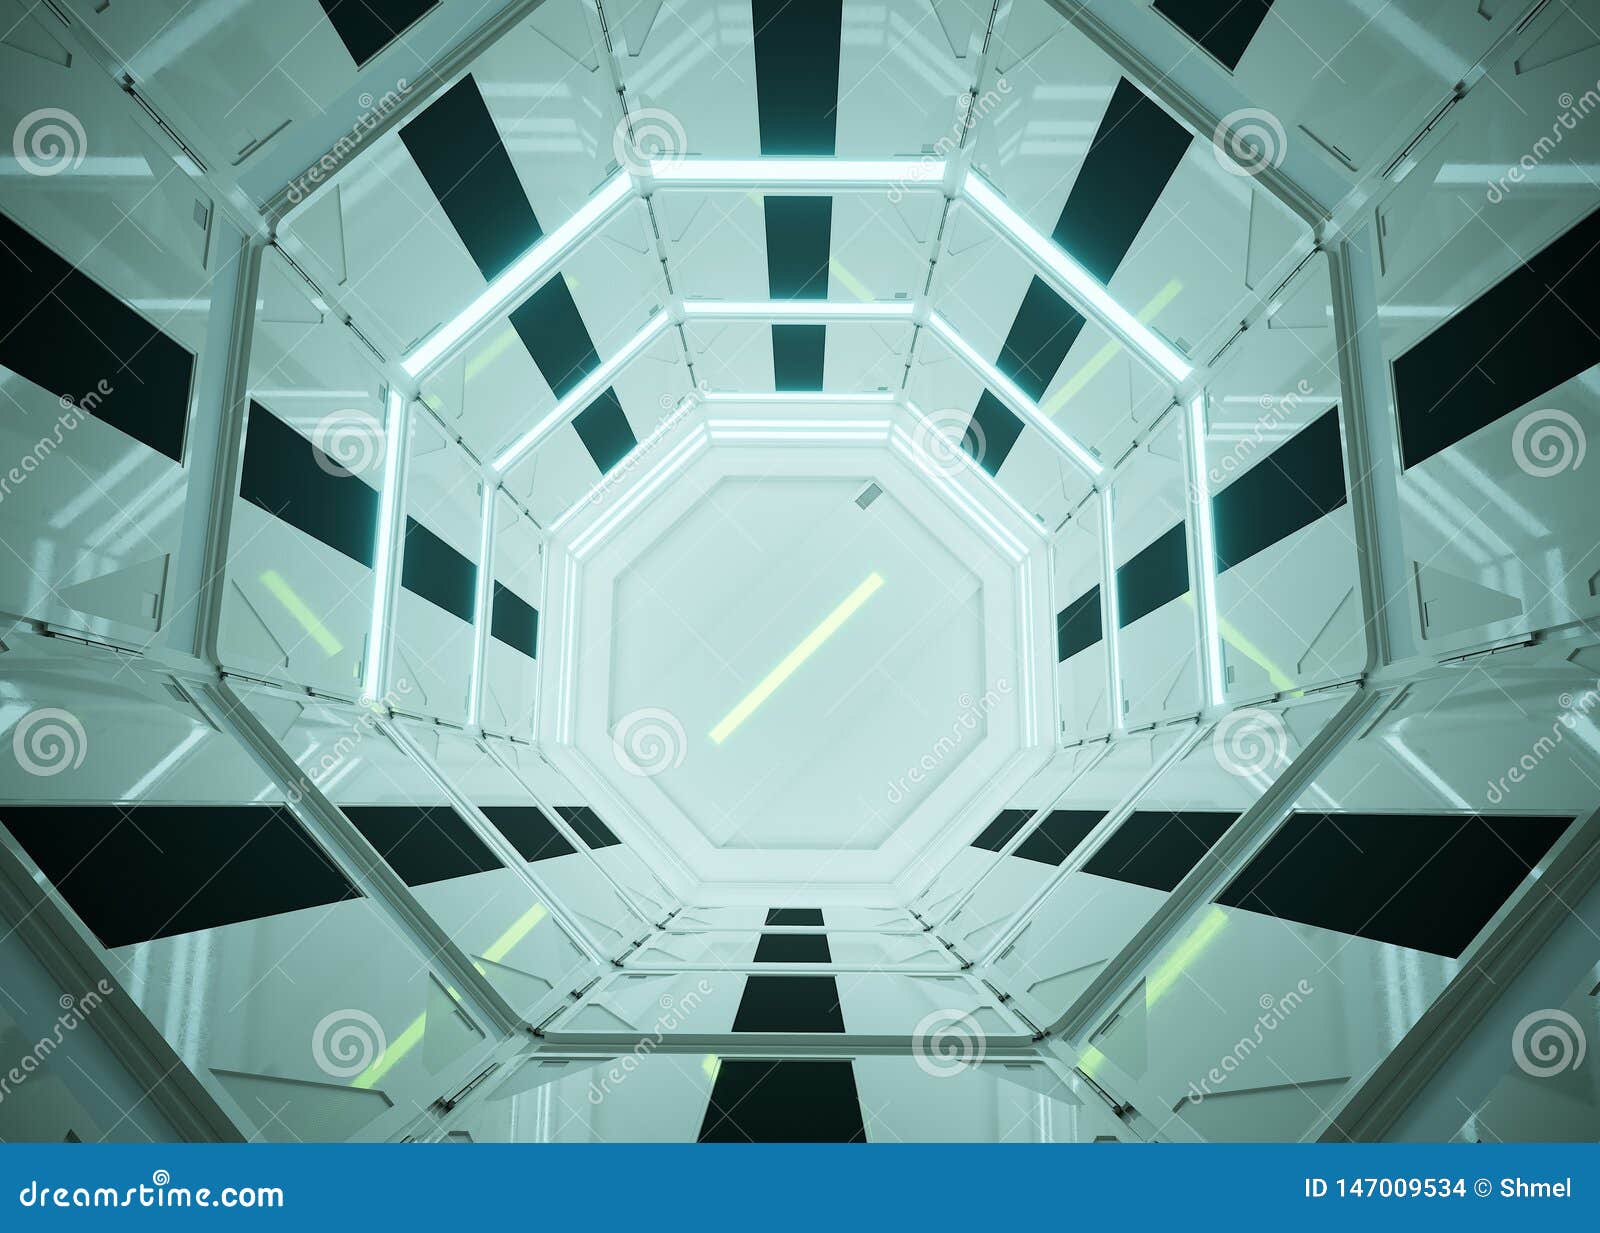 sci-fi interior. ufo - alien spaceship. futuristic. spaceship interior. technology, future